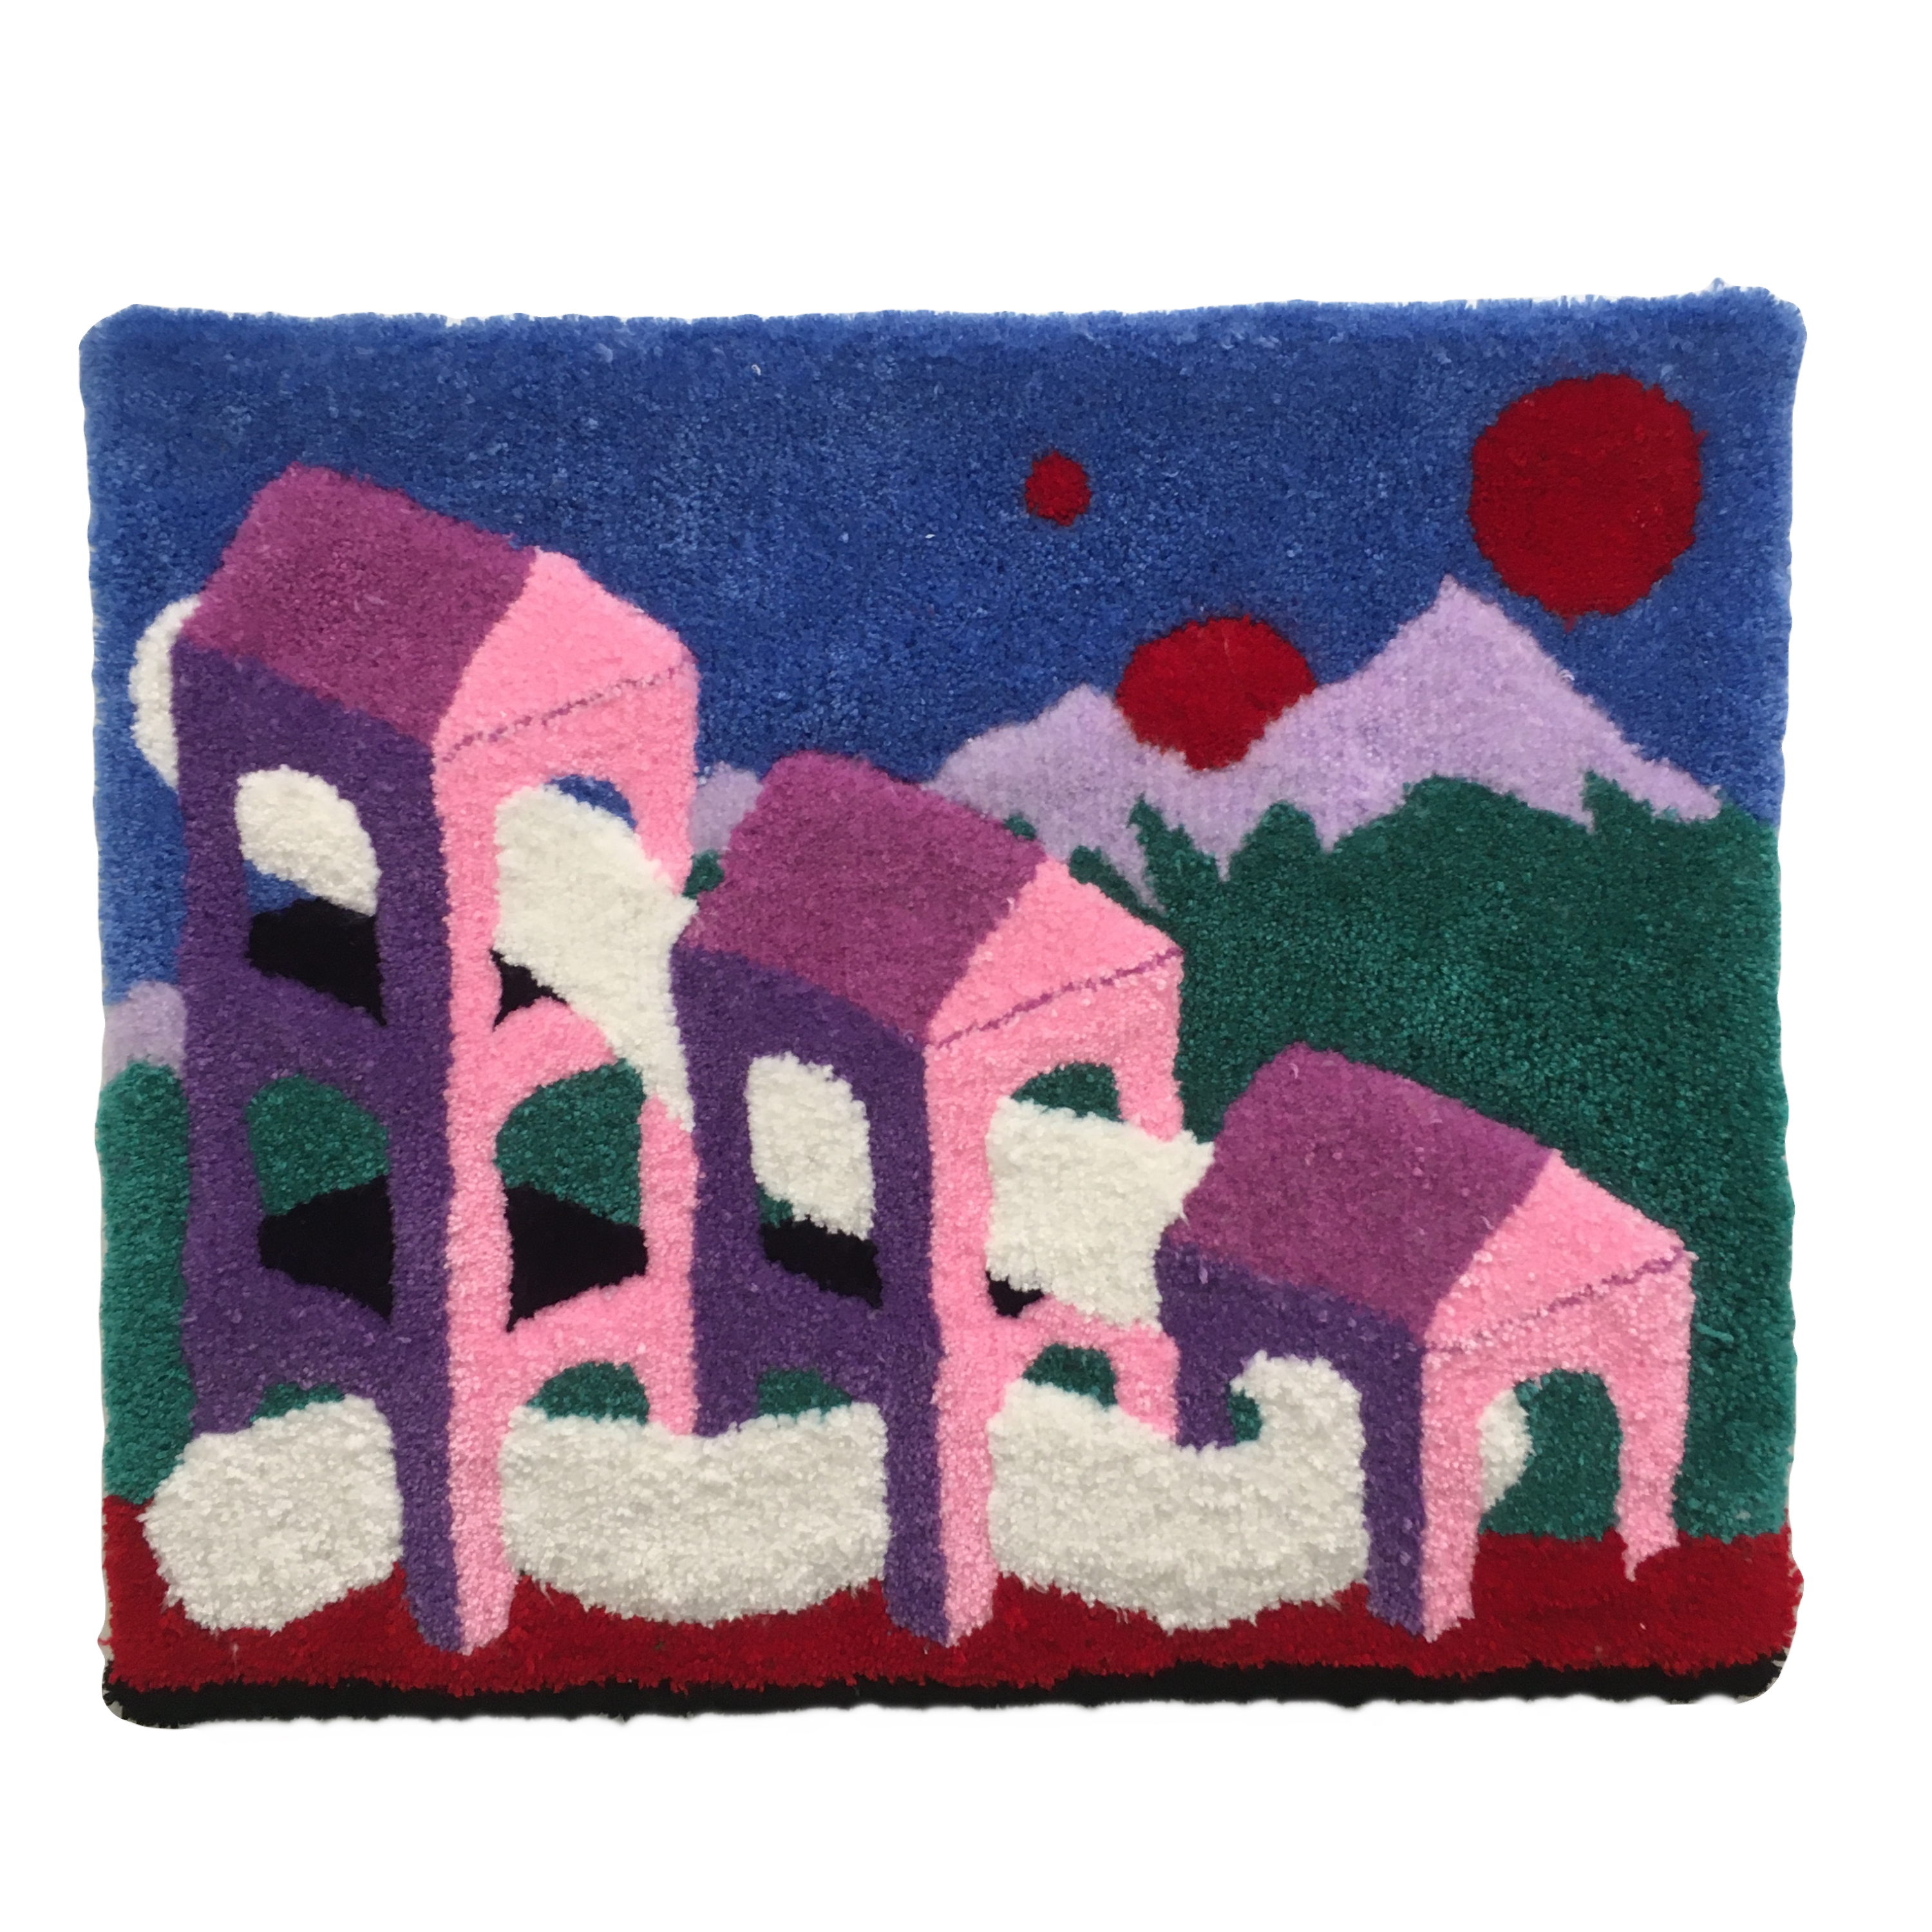 "Home" Acrylic Yarn on Backing Fabric by Matthew Gilbert 